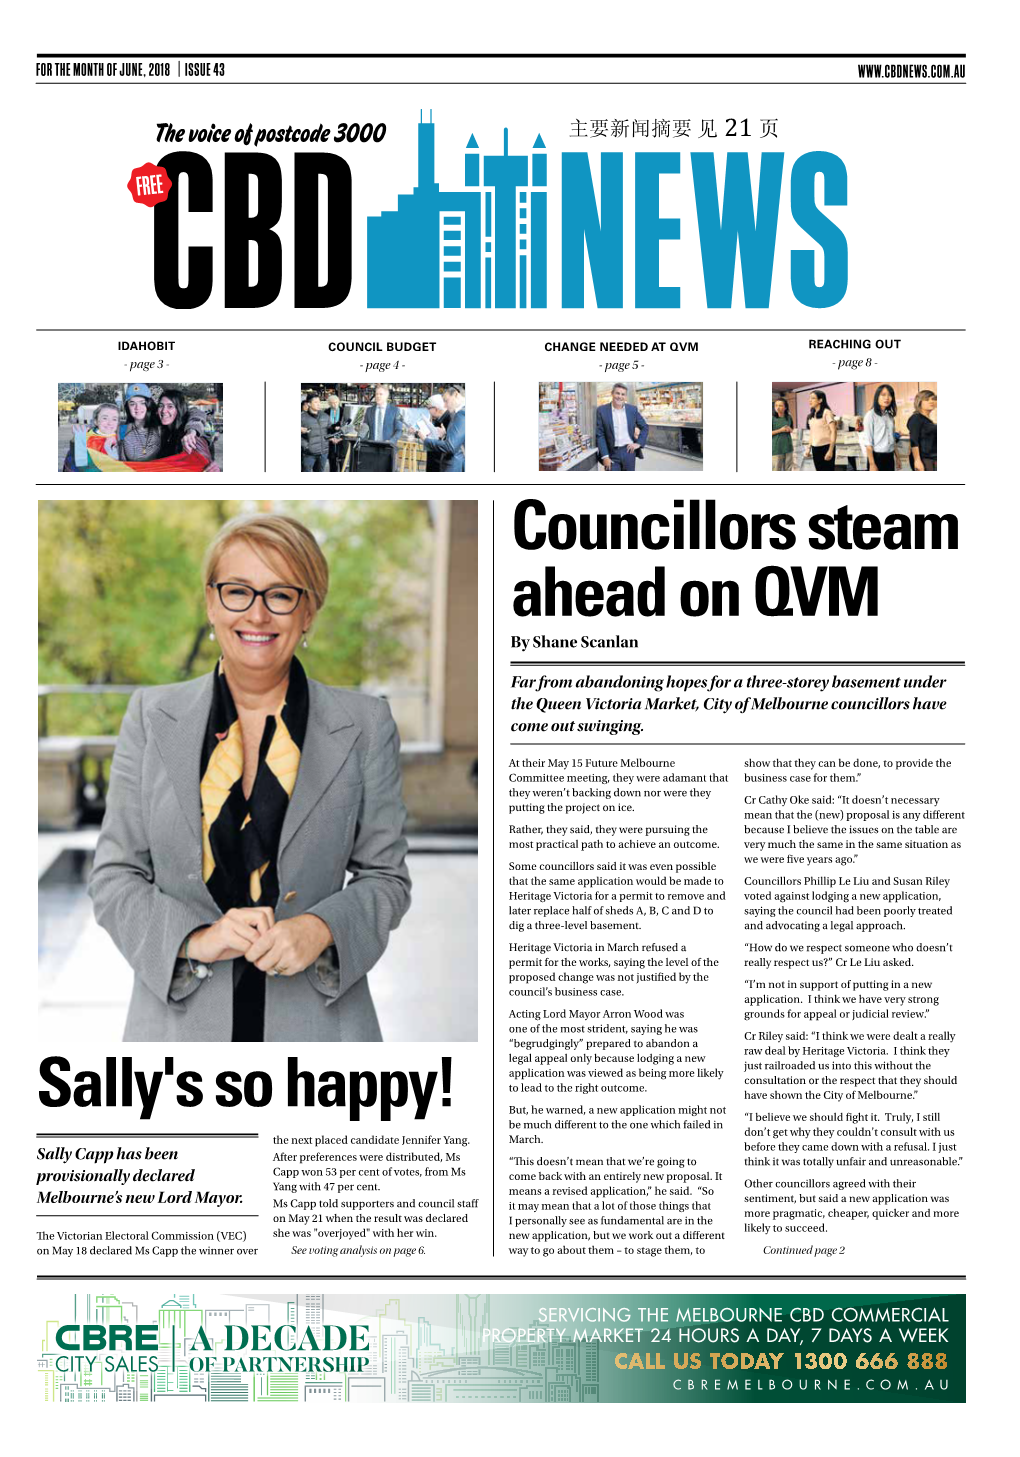 Councillors Steam Ahead on QVM Sally's So Happy!